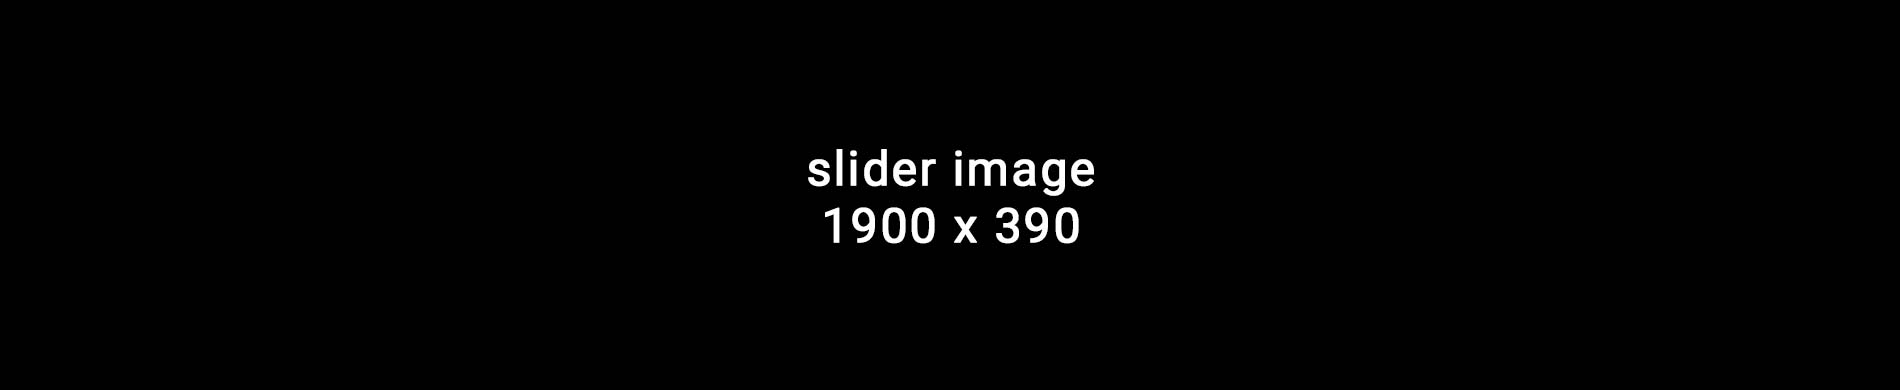 slider image 1900 by 390